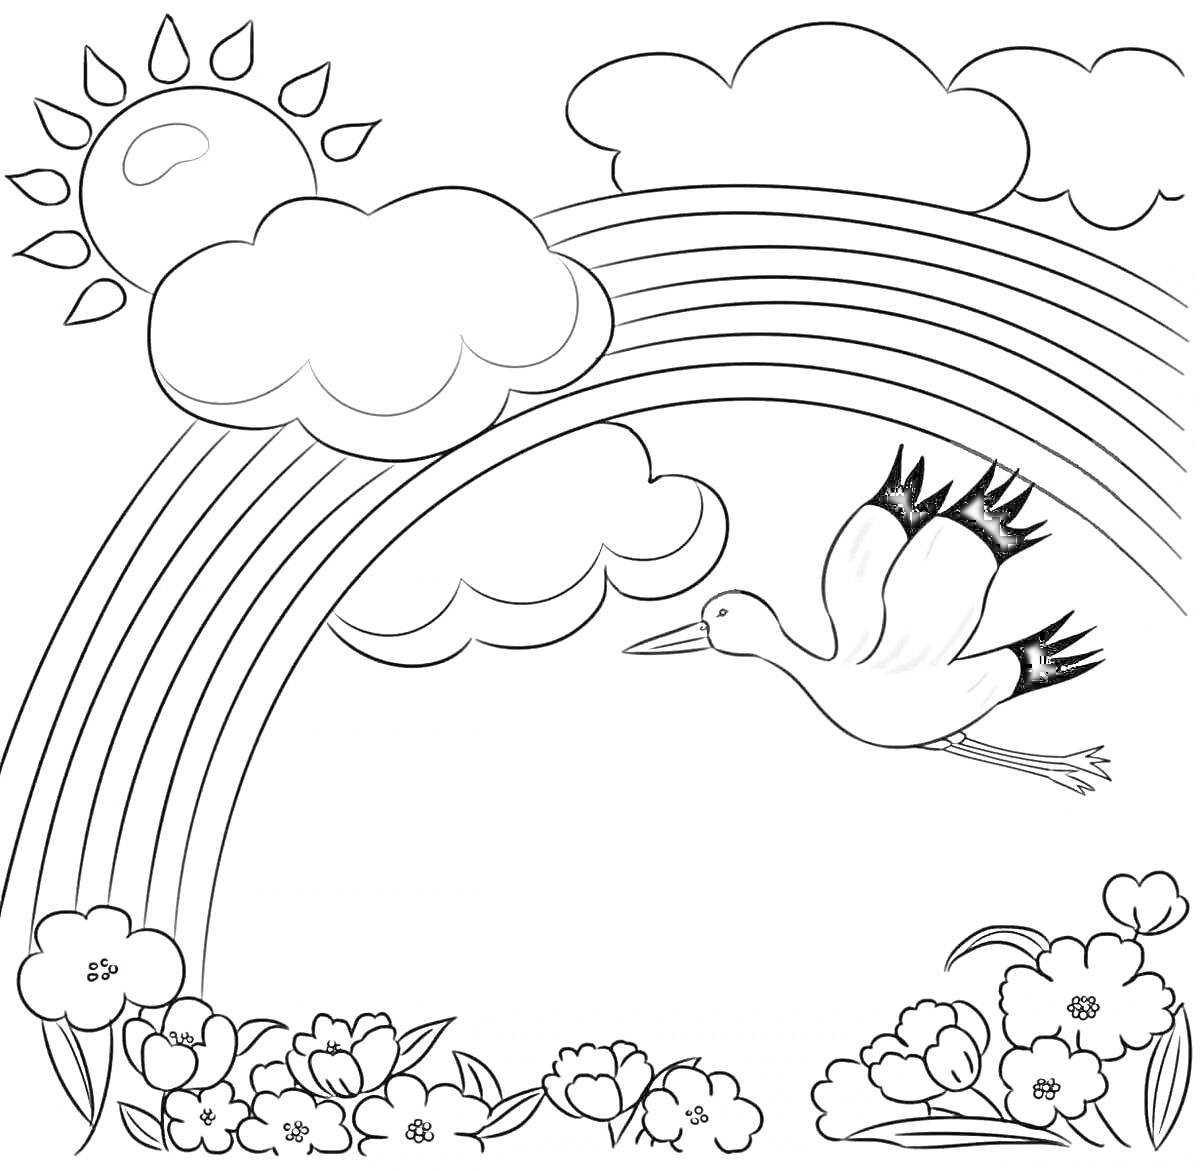 На раскраске изображено: Солнце, Облака, Аист, Цветы, Мир, Природа, Небо, Мир без войны